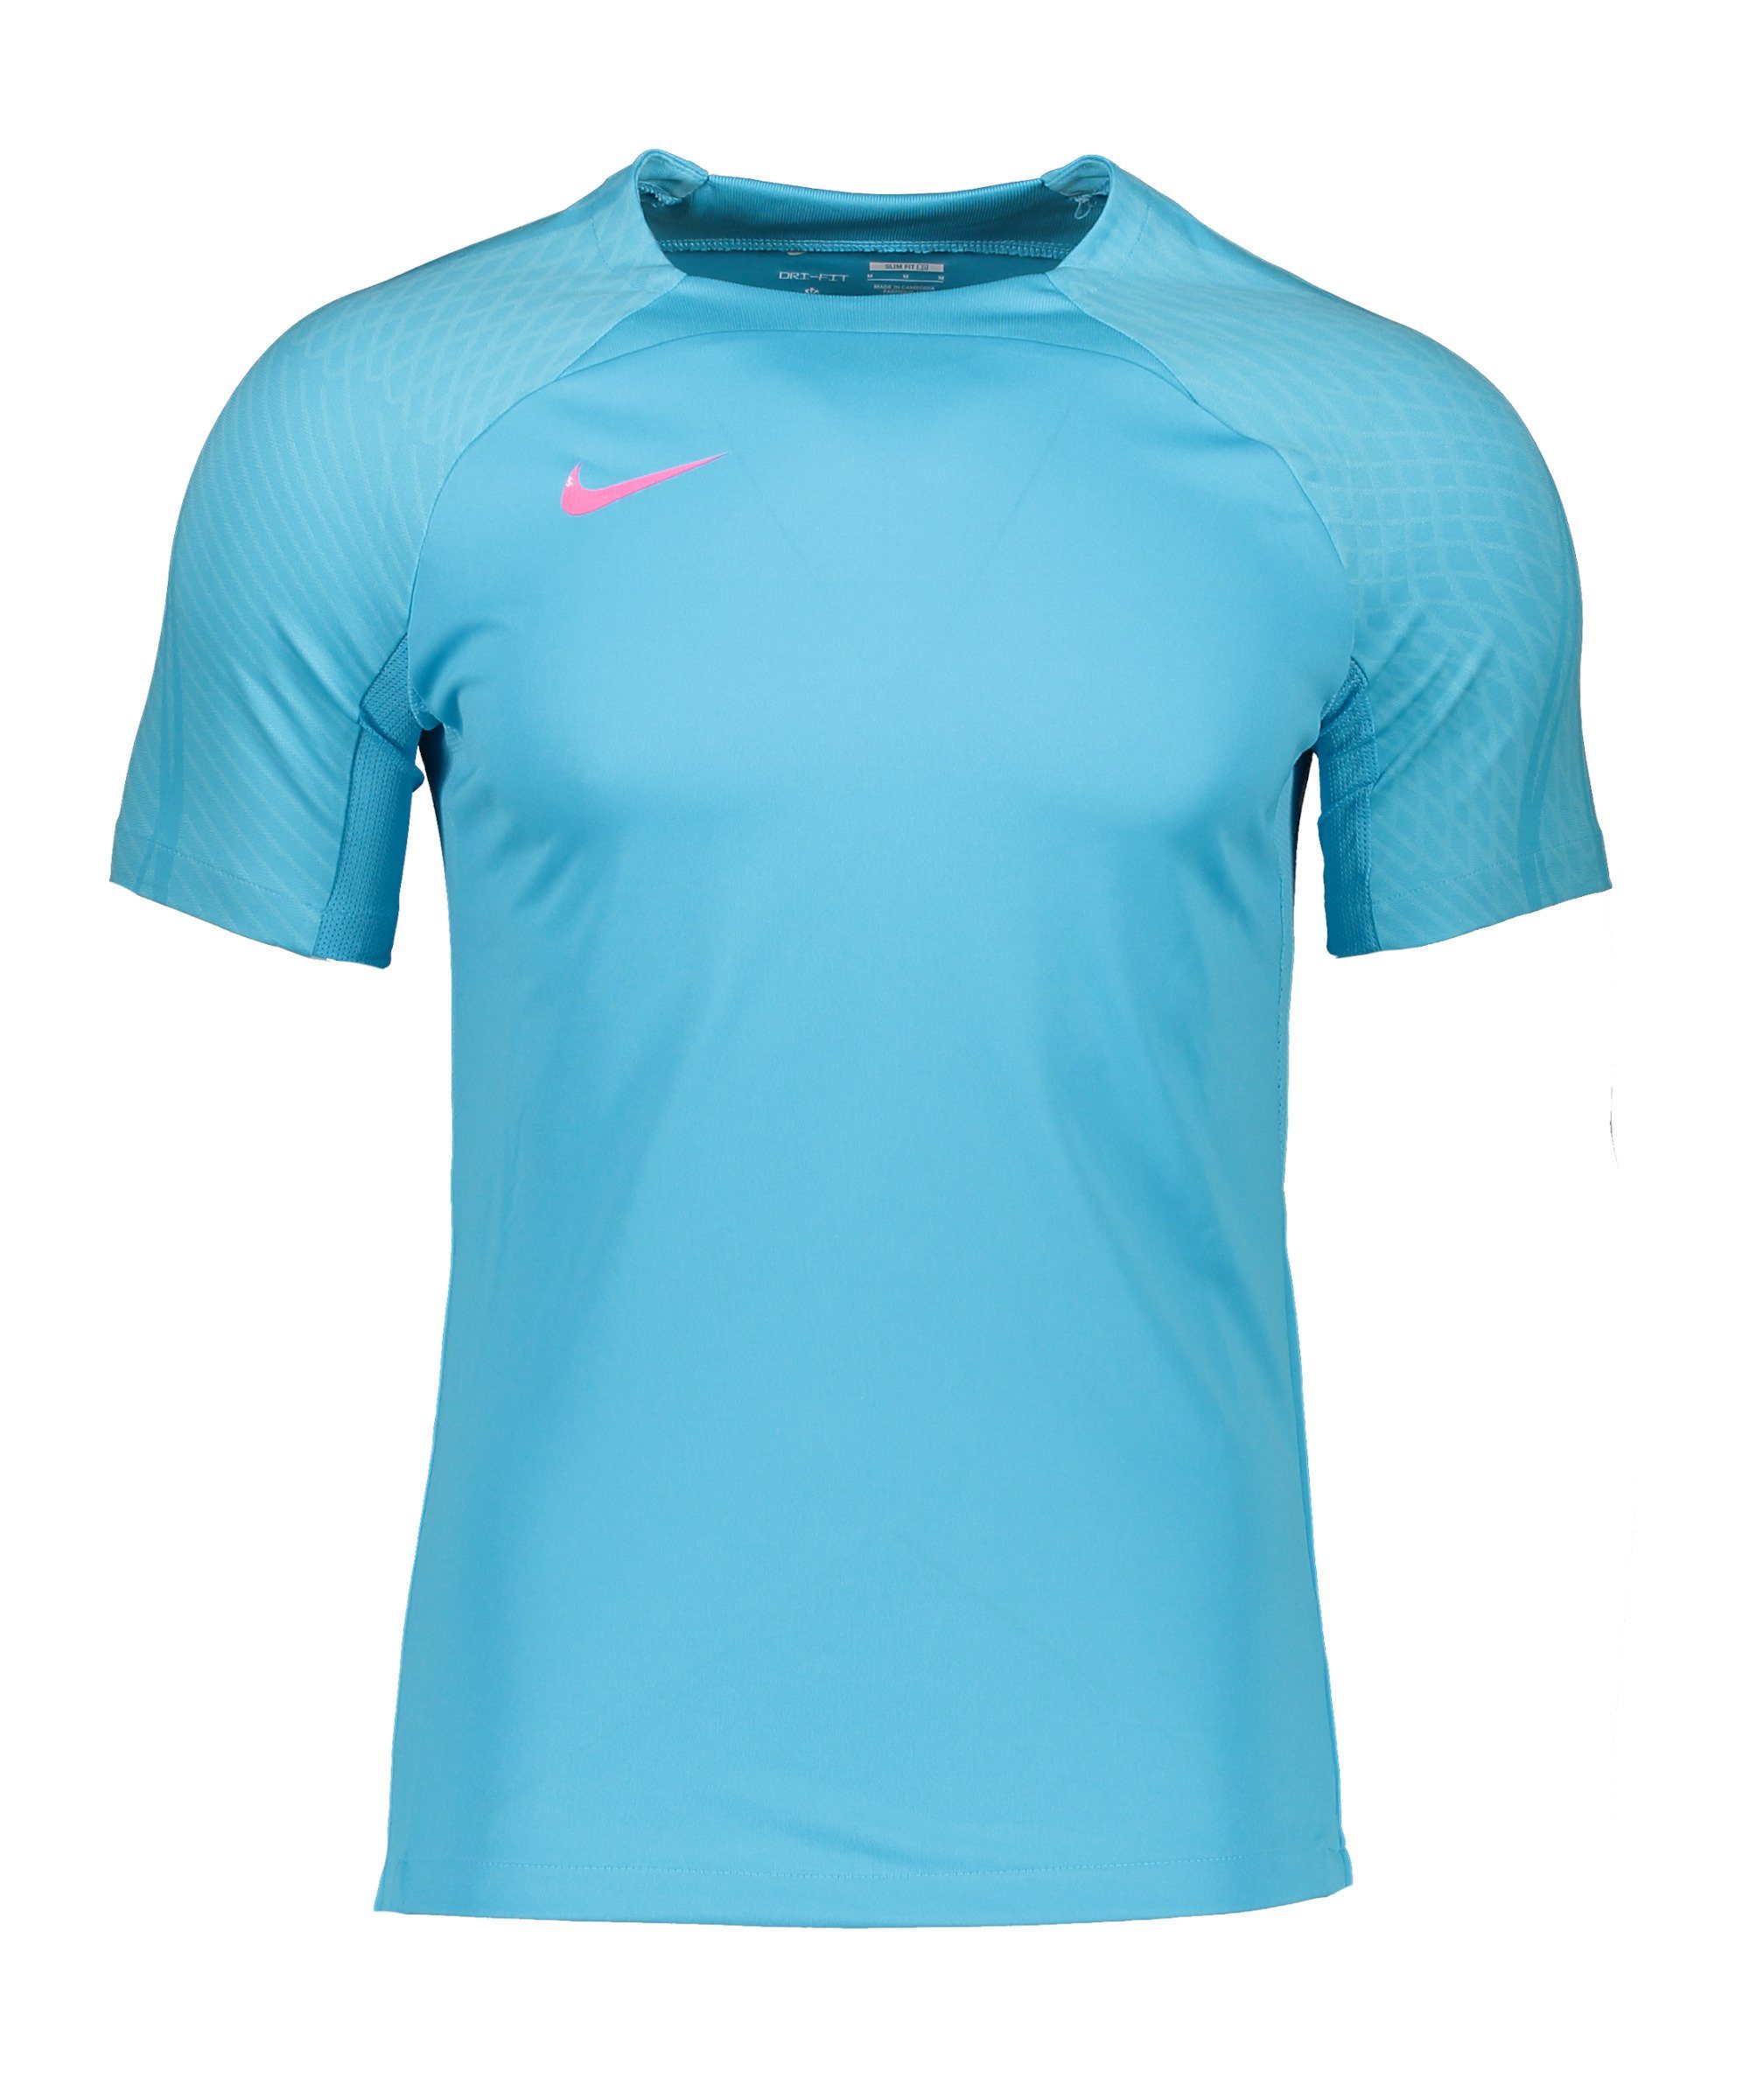 Nike T-Shirt Strike Trainingsshirt default blaublau